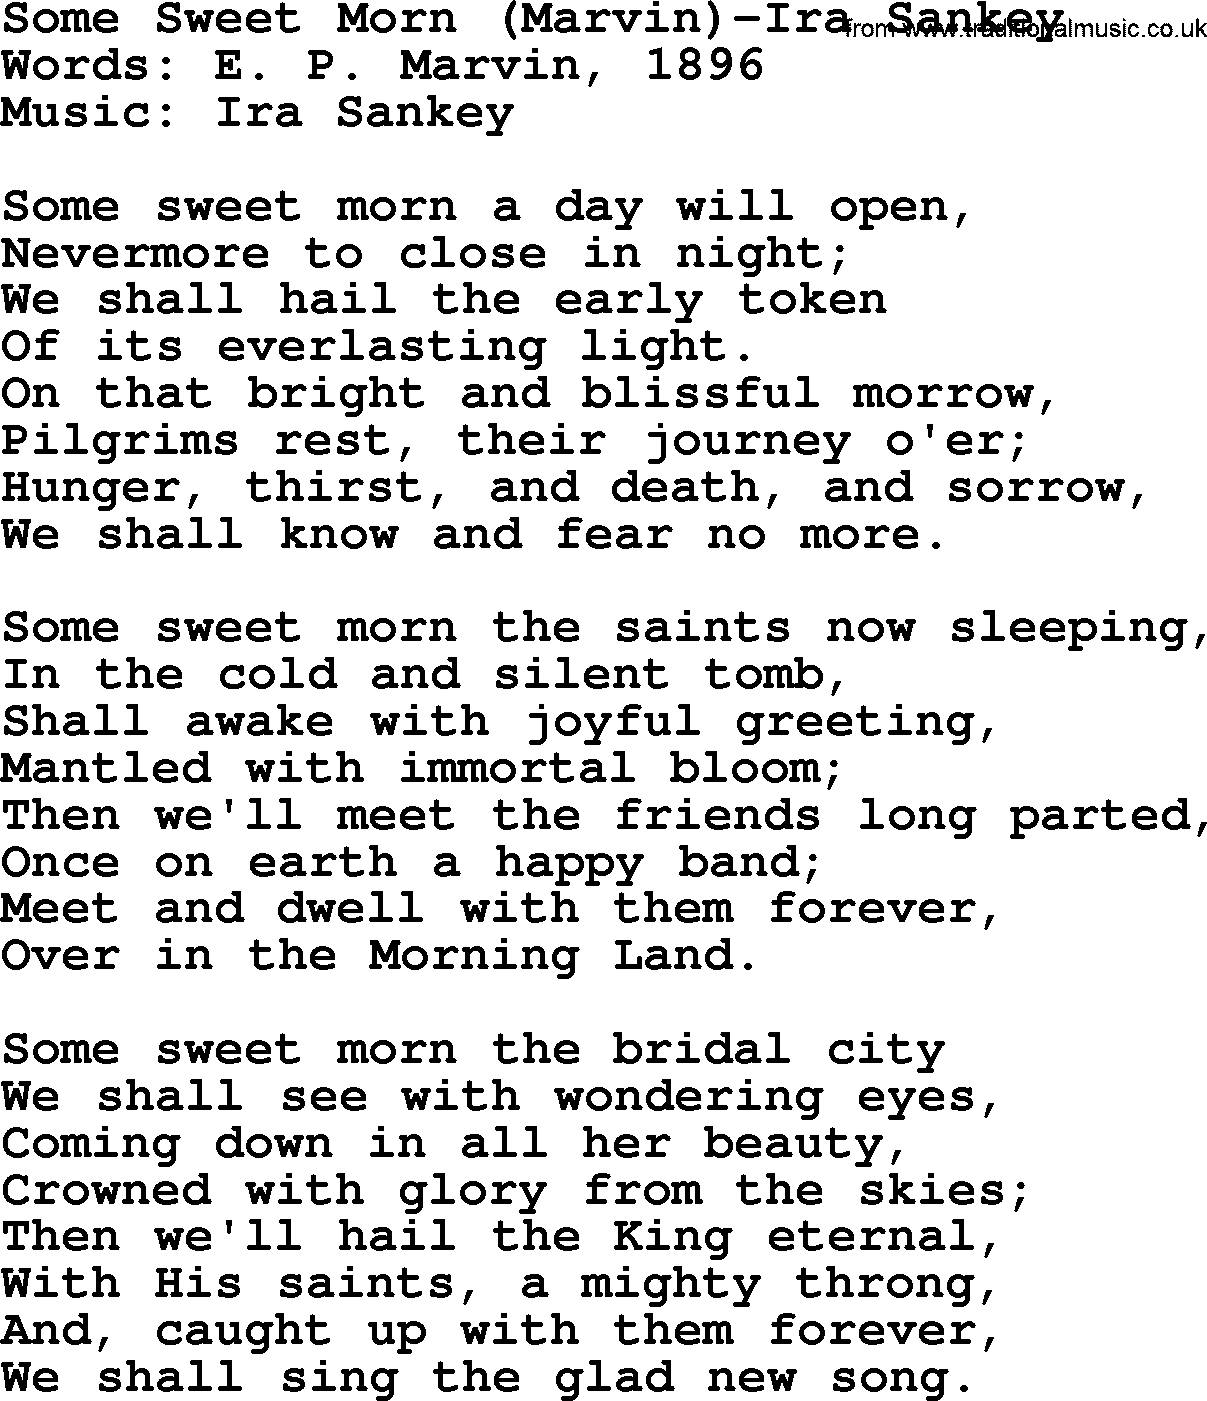 Ira Sankey hymn: Some Sweet Morn (Marvin)-Ira Sankey, lyrics